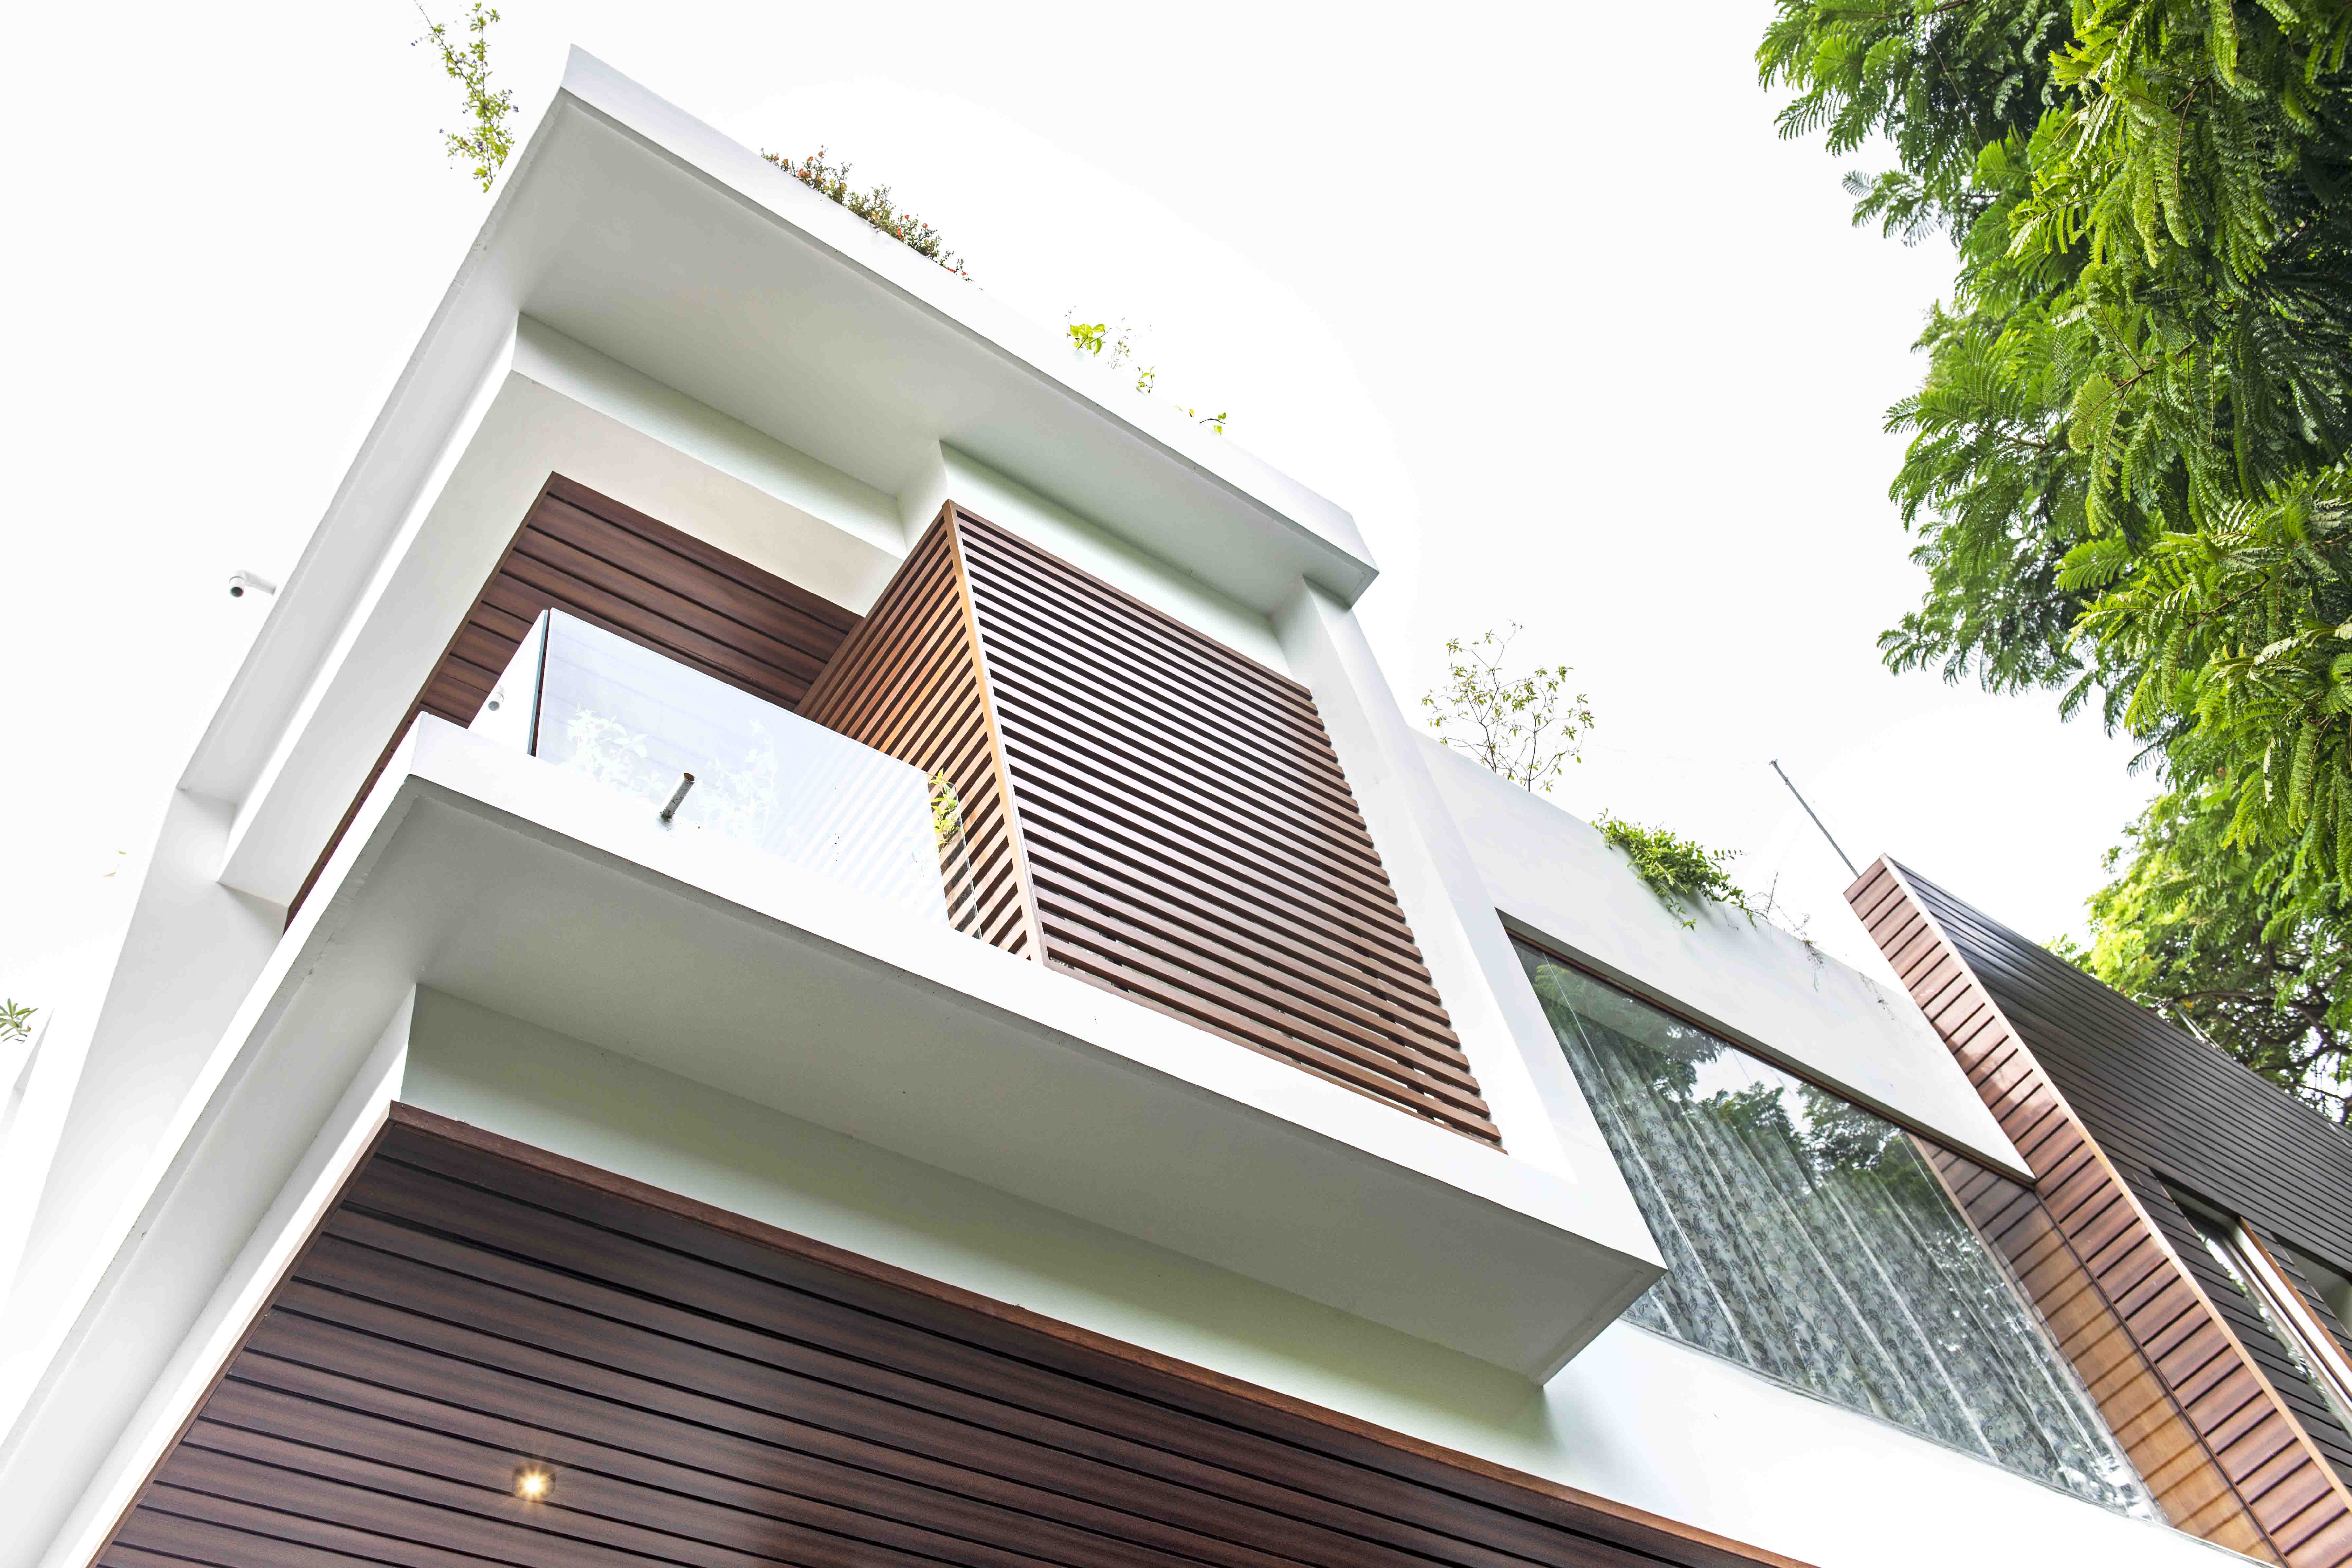 Architecture housing service in Adayar Chennai India